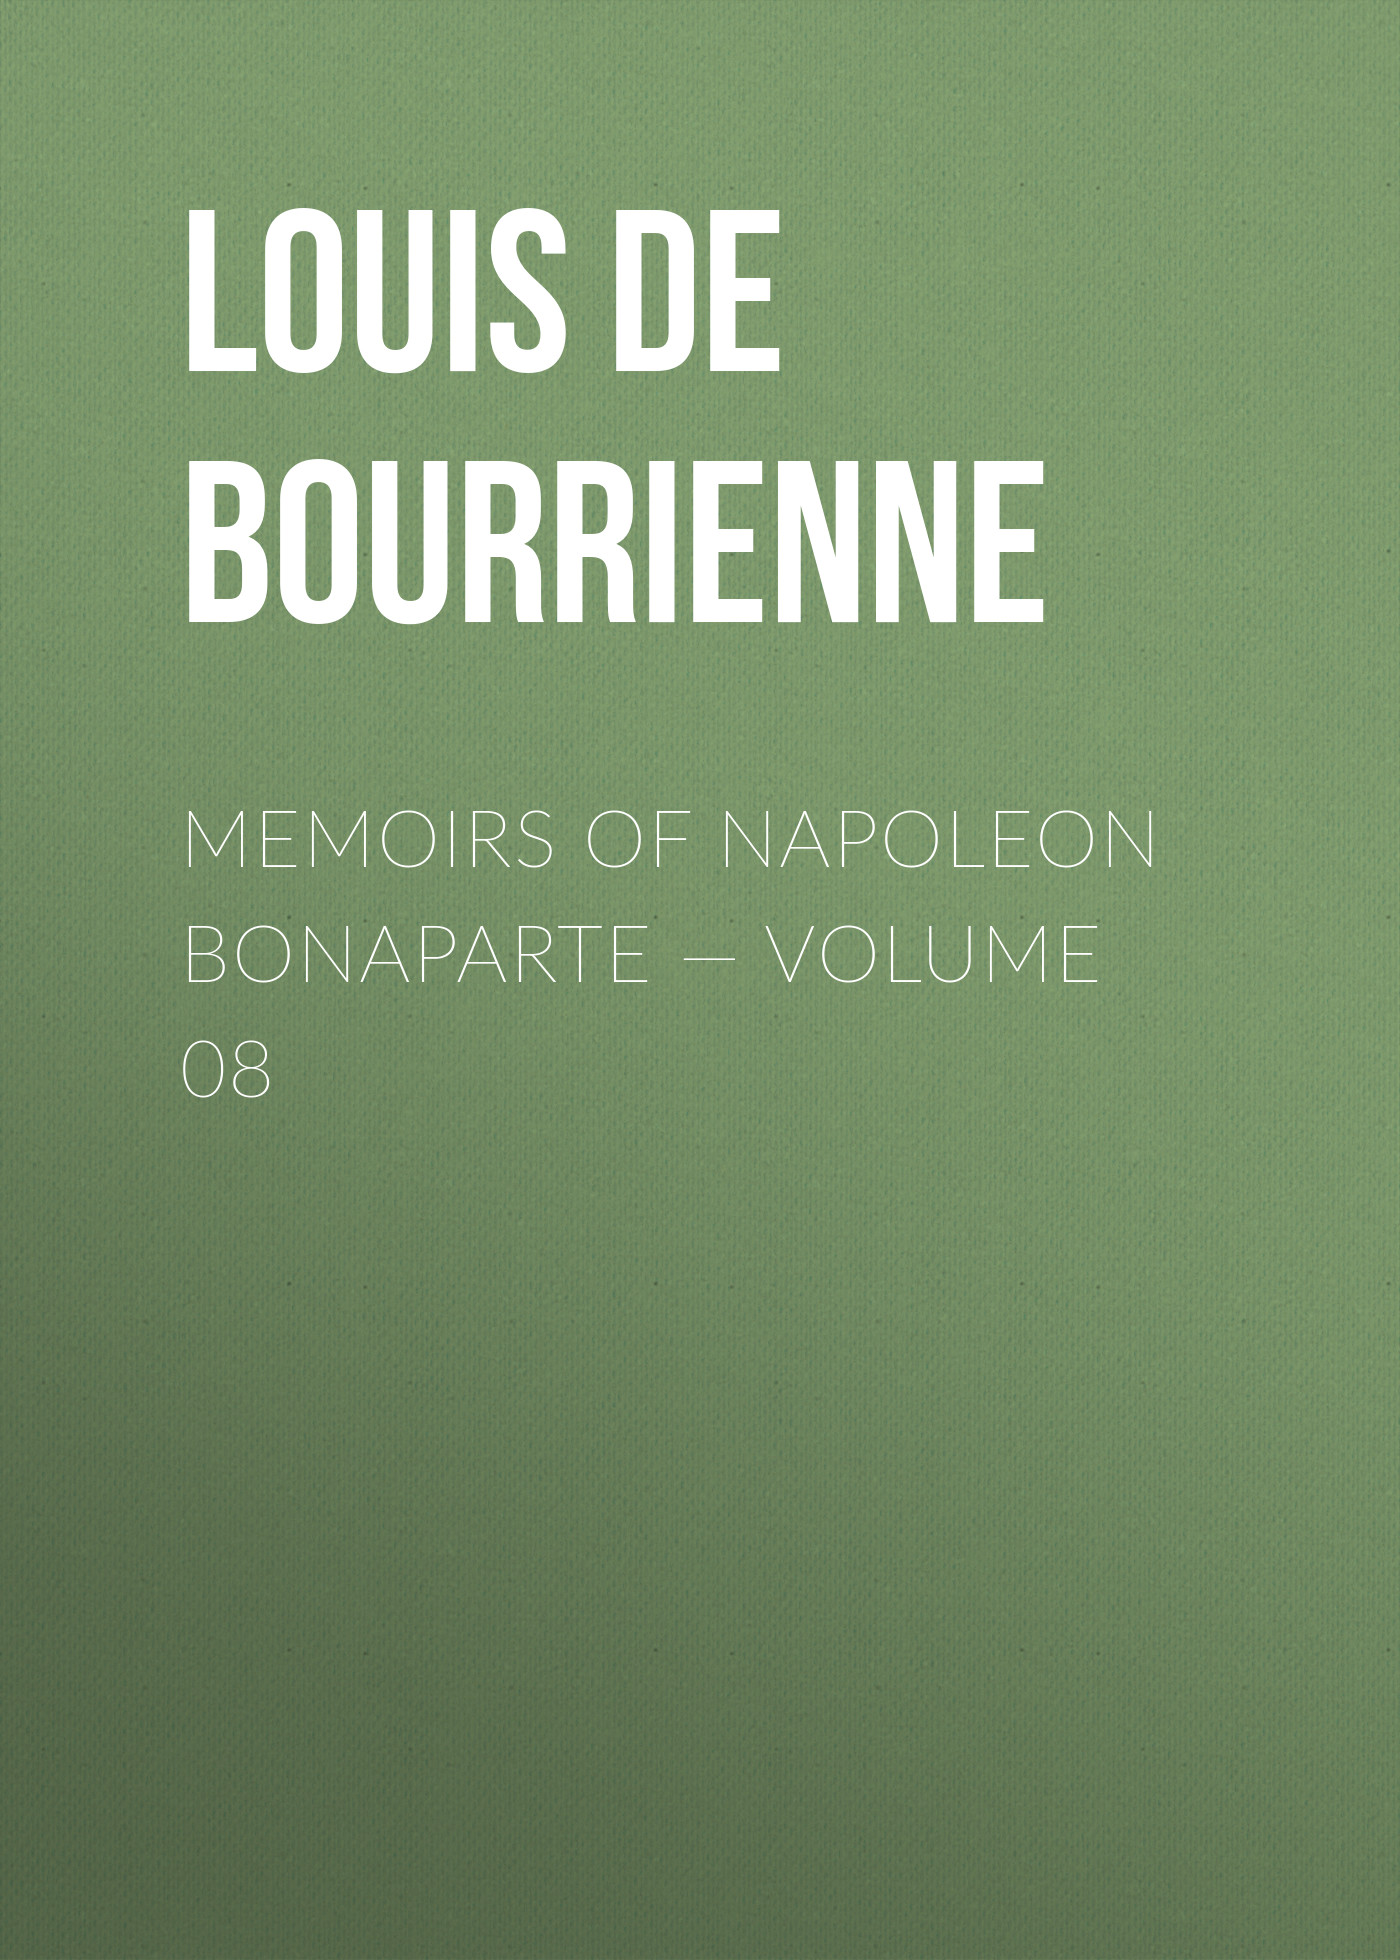 Memoirs of Napoleon Bonaparte— Volume 08